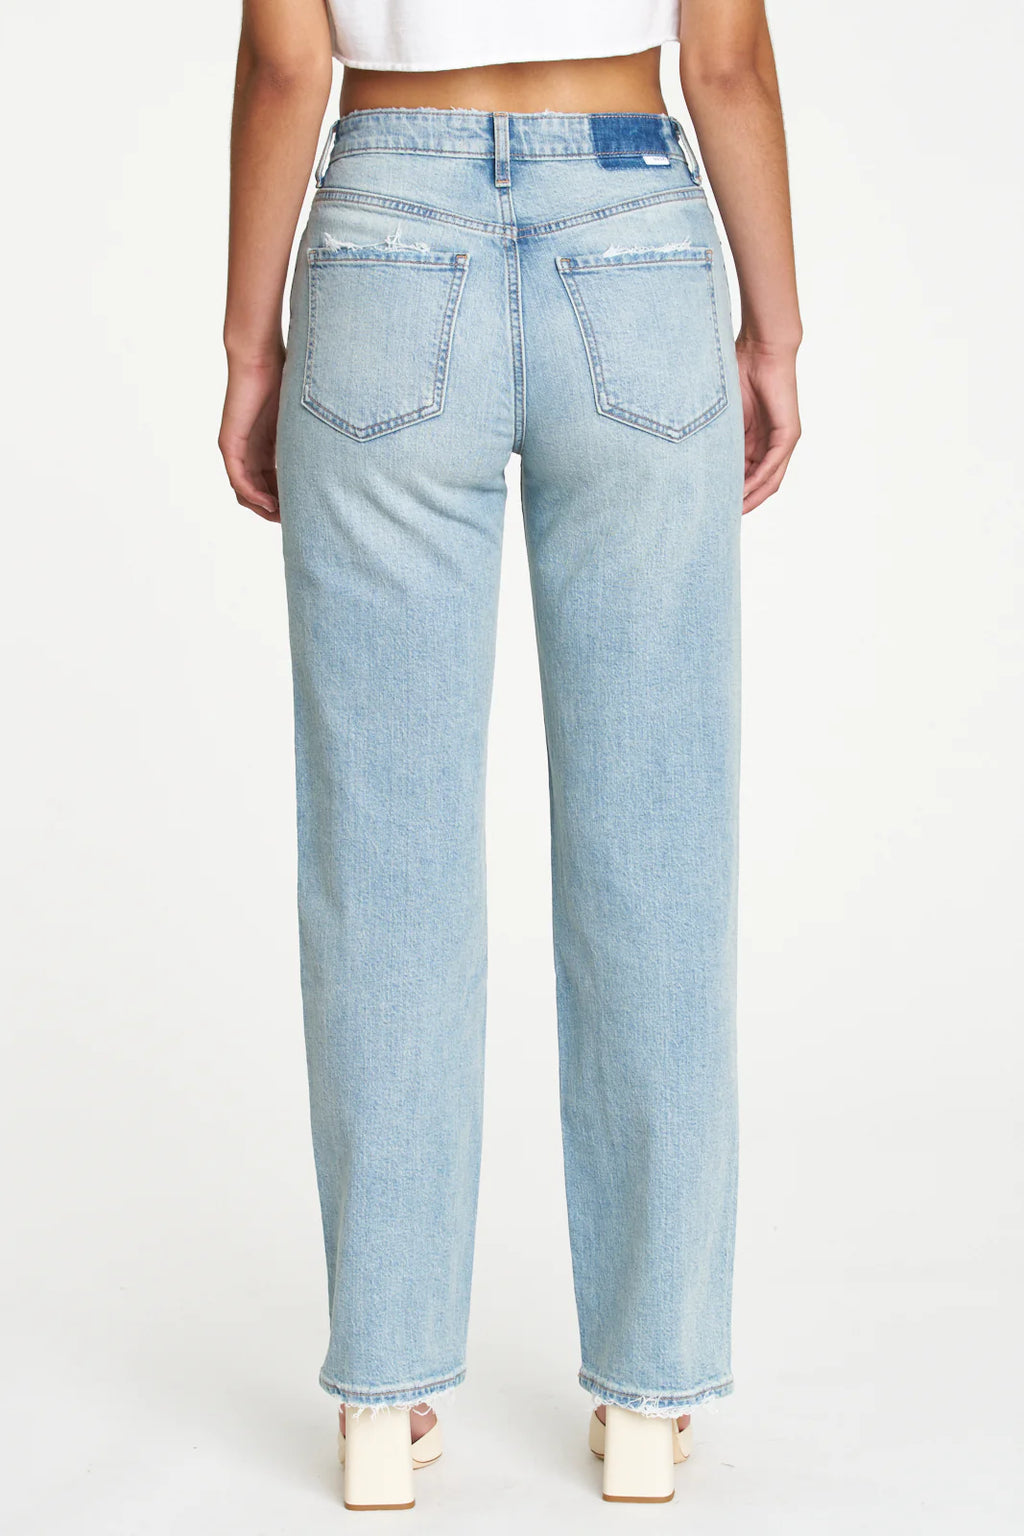 Beach Cove Midrise Linen-Blend Shorts in Blush • Impressions Online Boutique